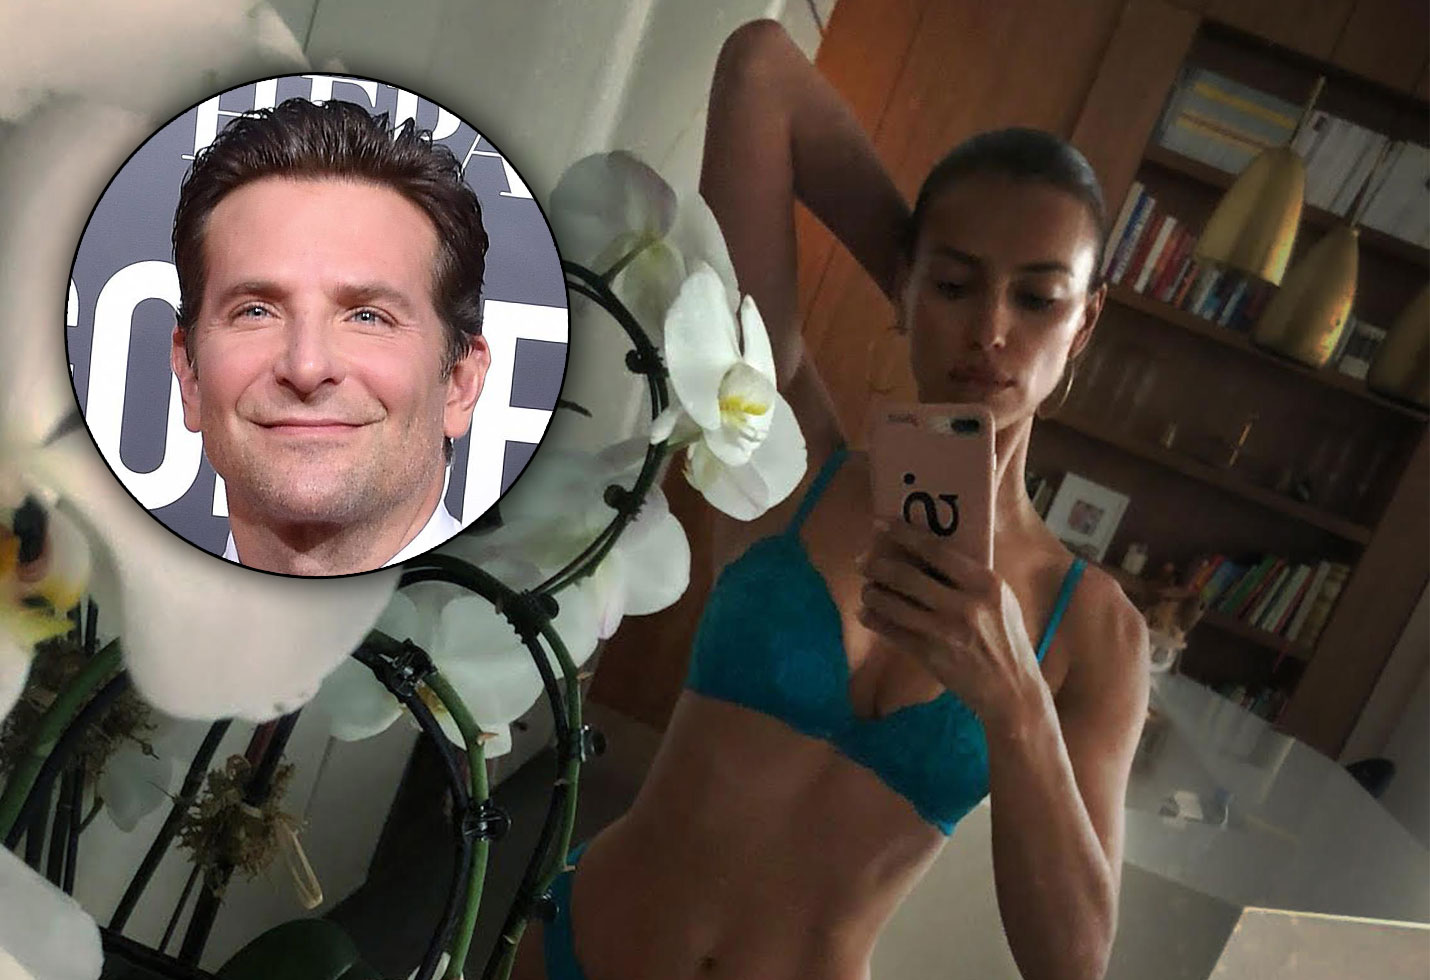 Irina Shayk Shares Sexy Lingerie Selfie After Bradley Cooper Split1430 x 980